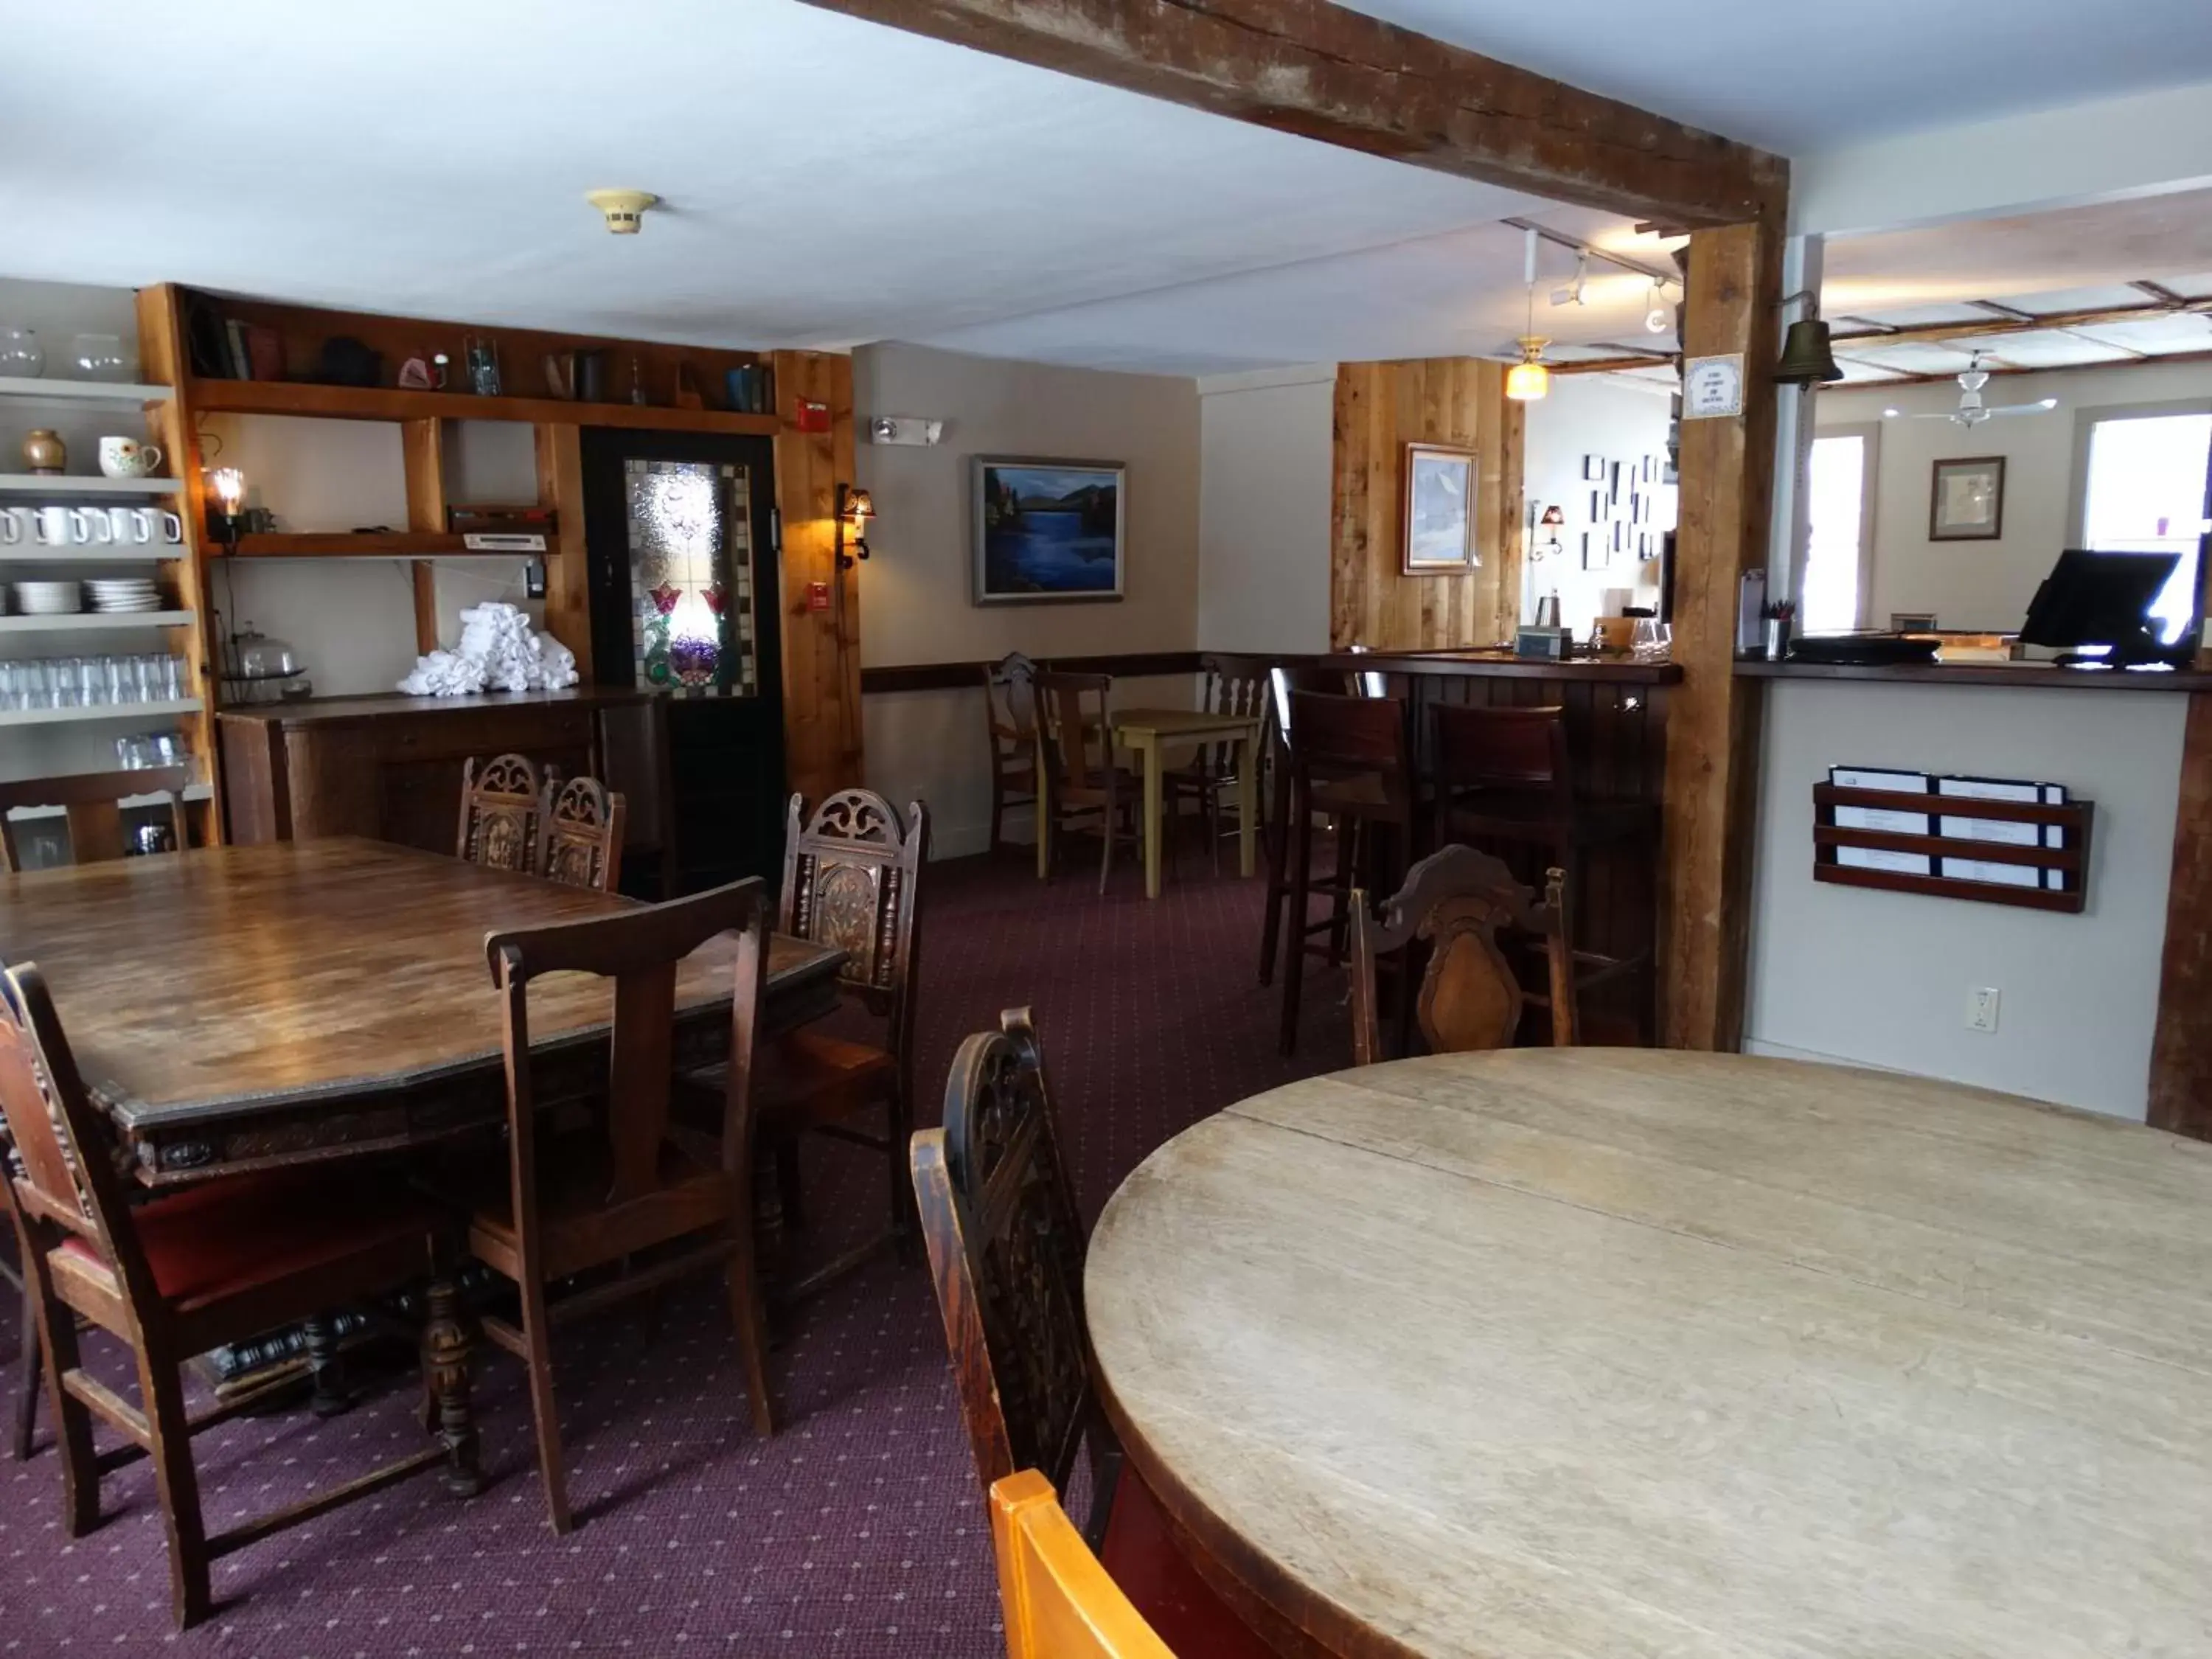 Restaurant/places to eat, Dining Area in Shoreham Inn Bed & Breakfast